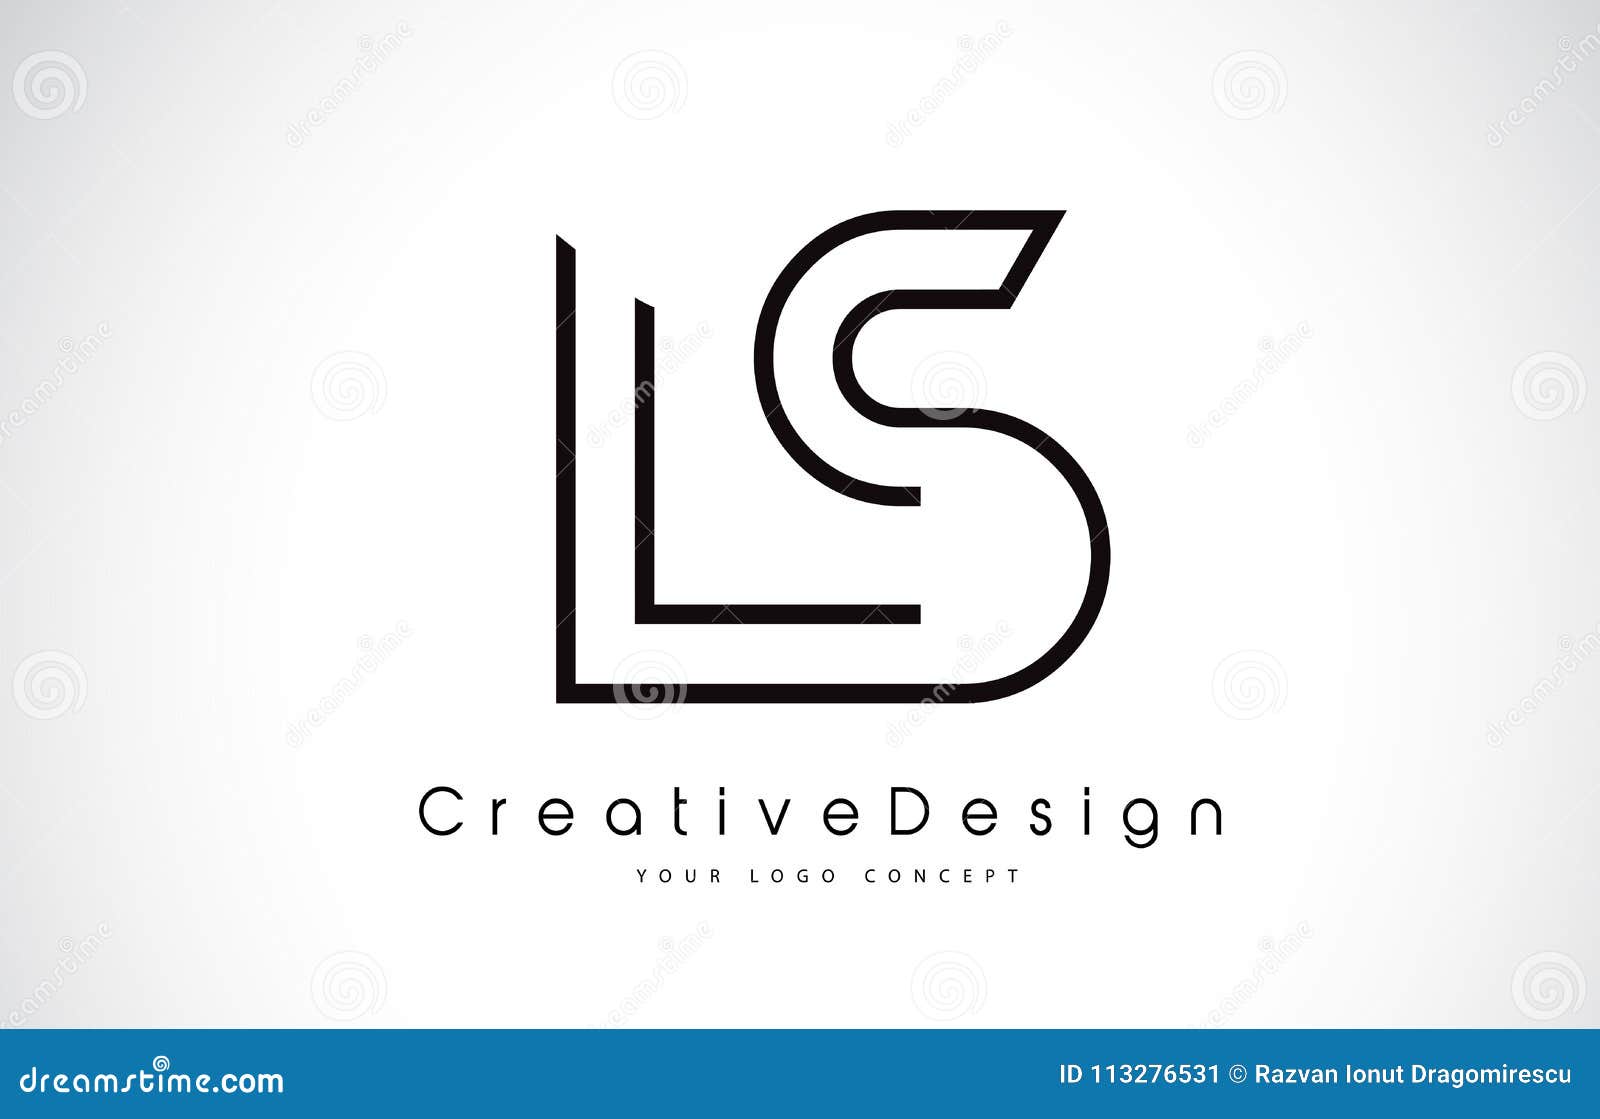 Ls new logo | Logo design contest | 99designs